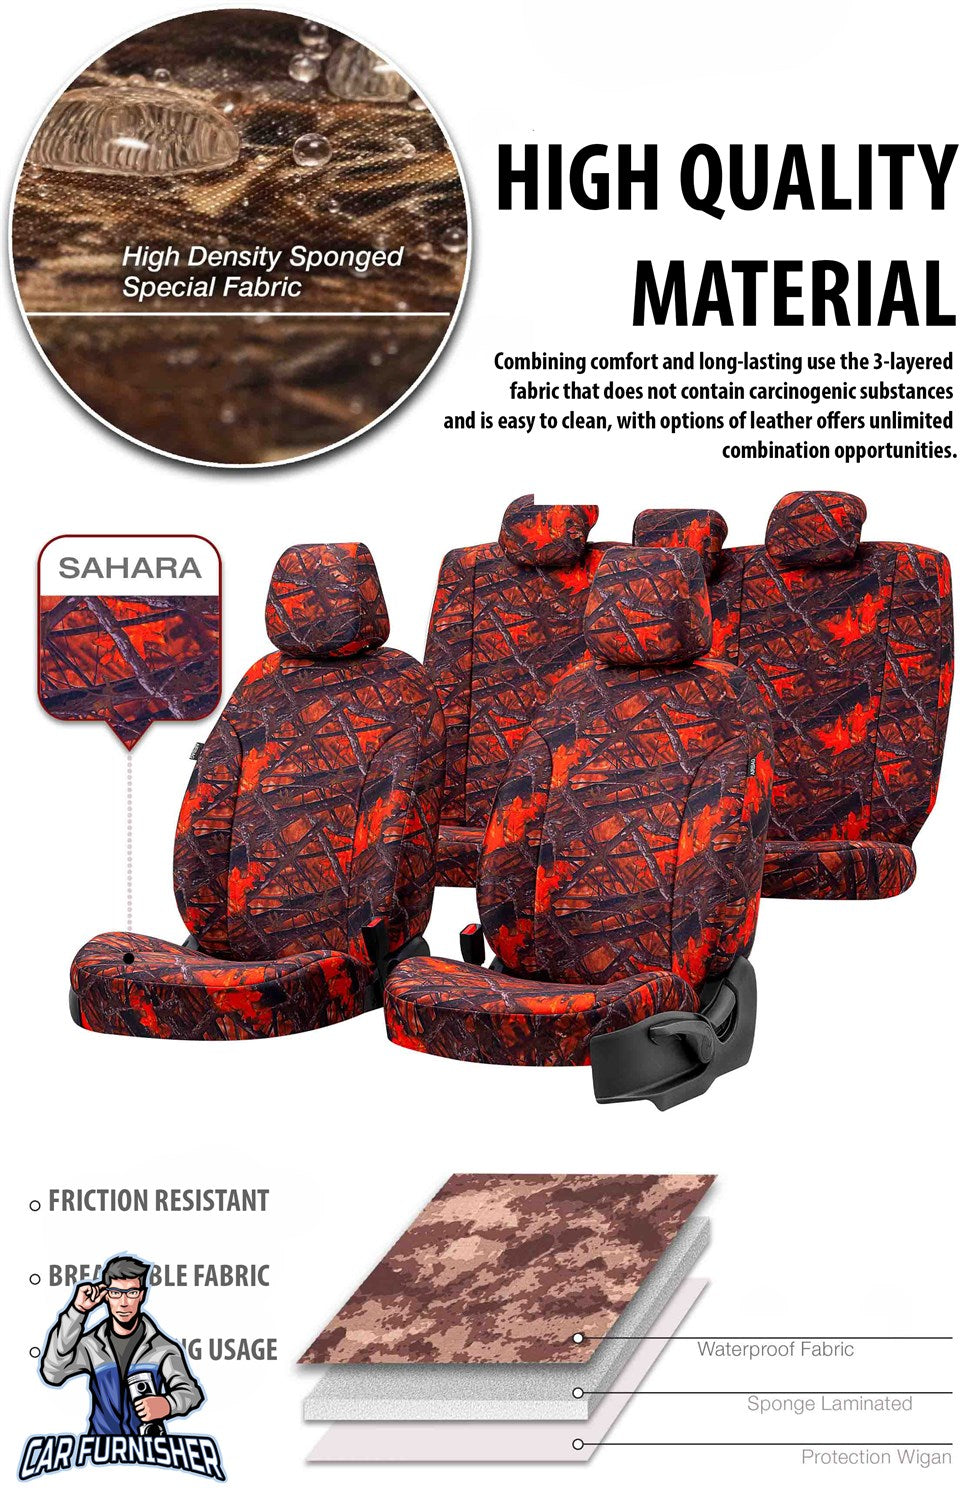 Fiat Stilo Seat Covers Camouflage Waterproof Design Alps Camo Waterproof Fabric